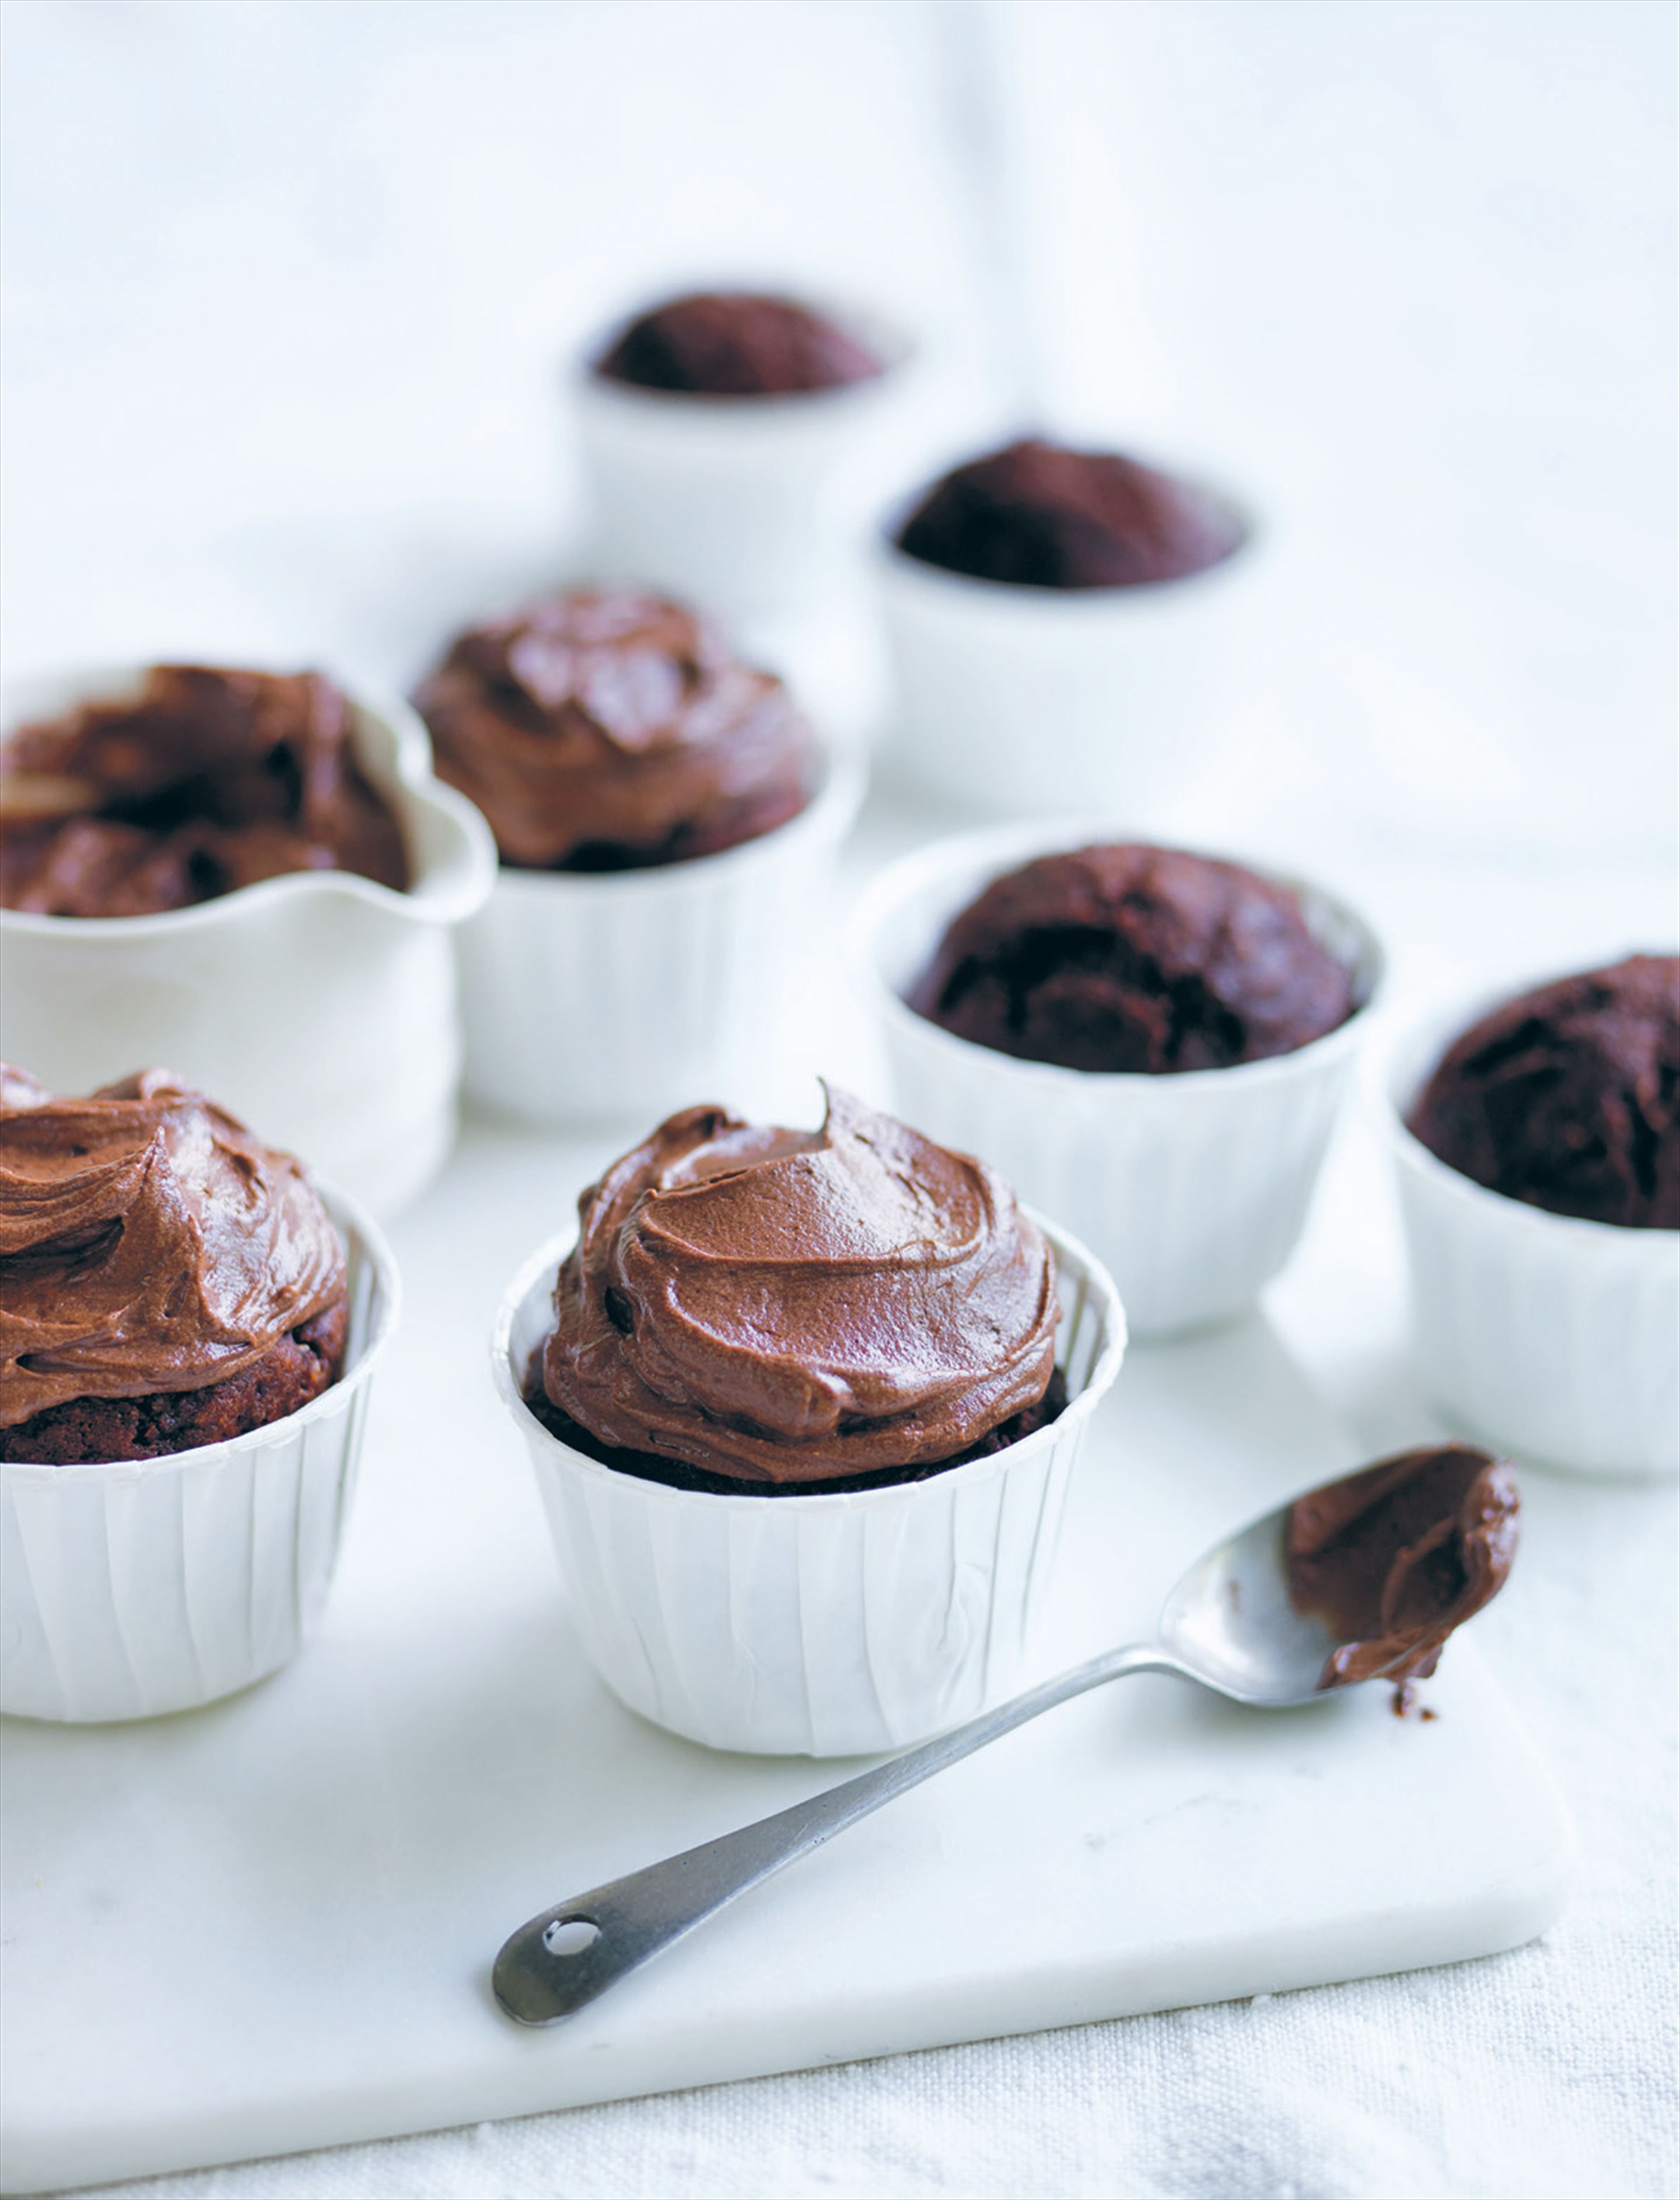 Chocolate beetroot cupcakes